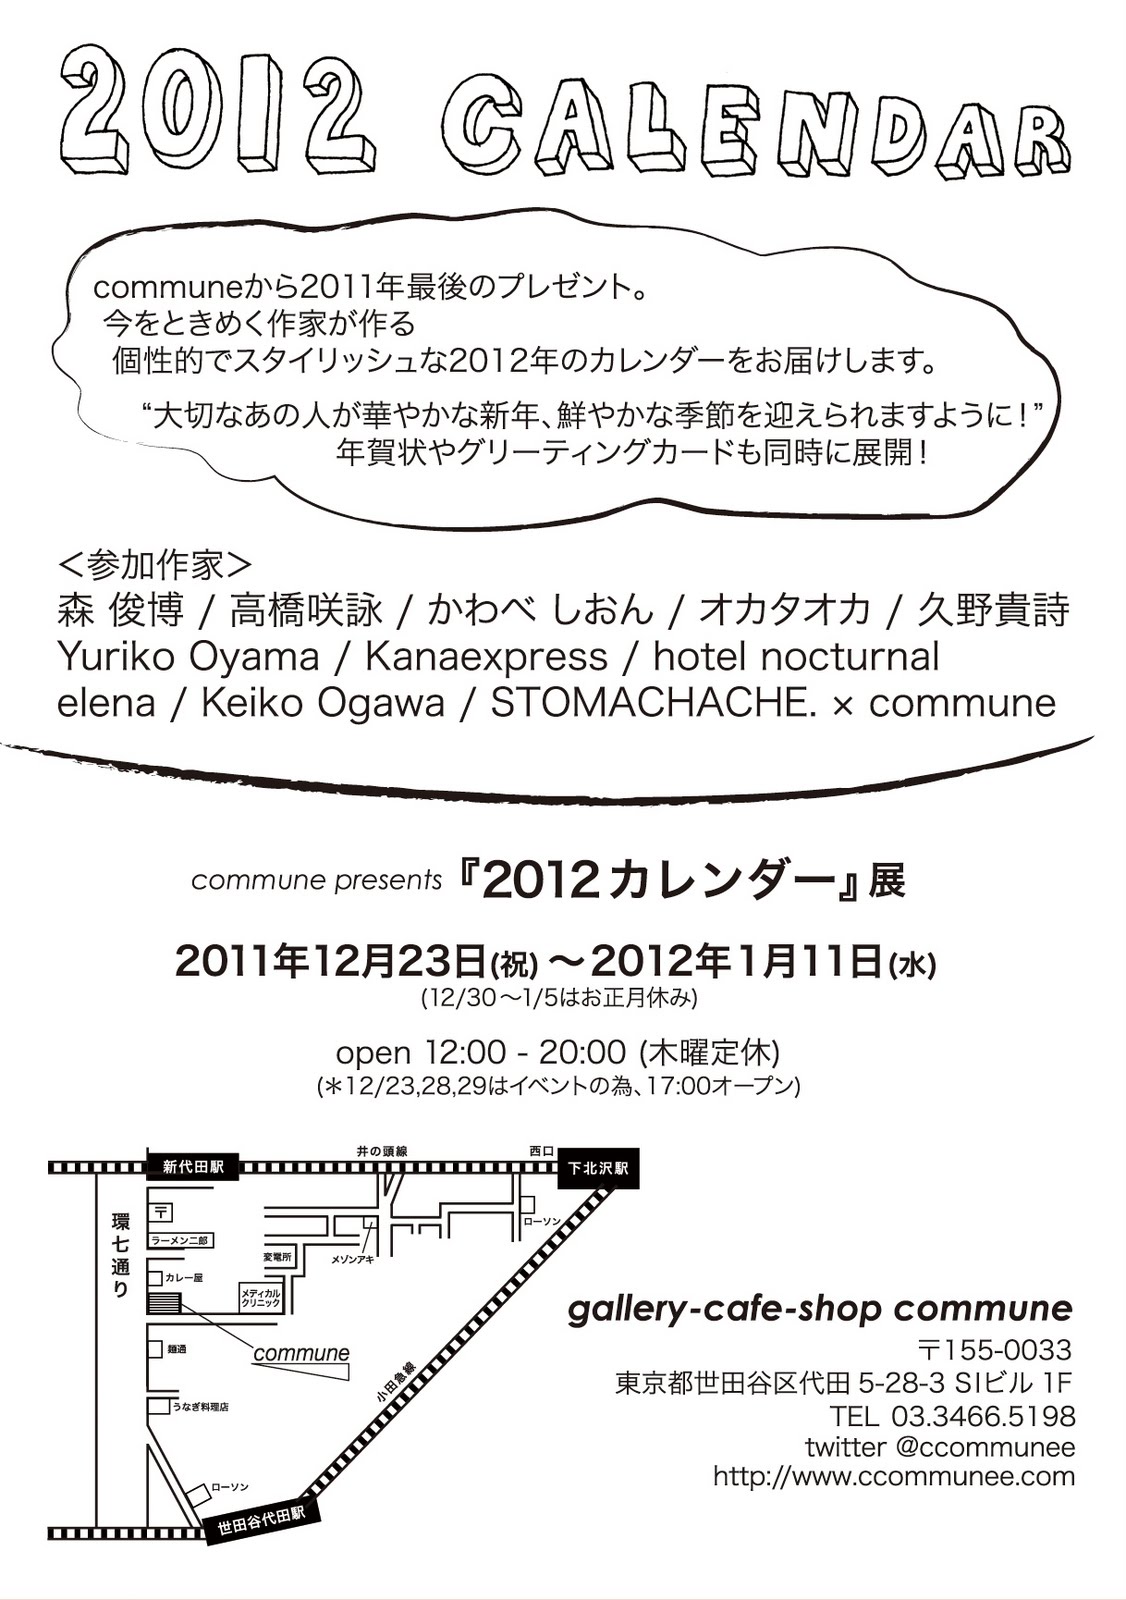 Commune Gallery Info Dec 23 Fri Jan 11 Wed 12 Commune Presents 12 Calendar 展